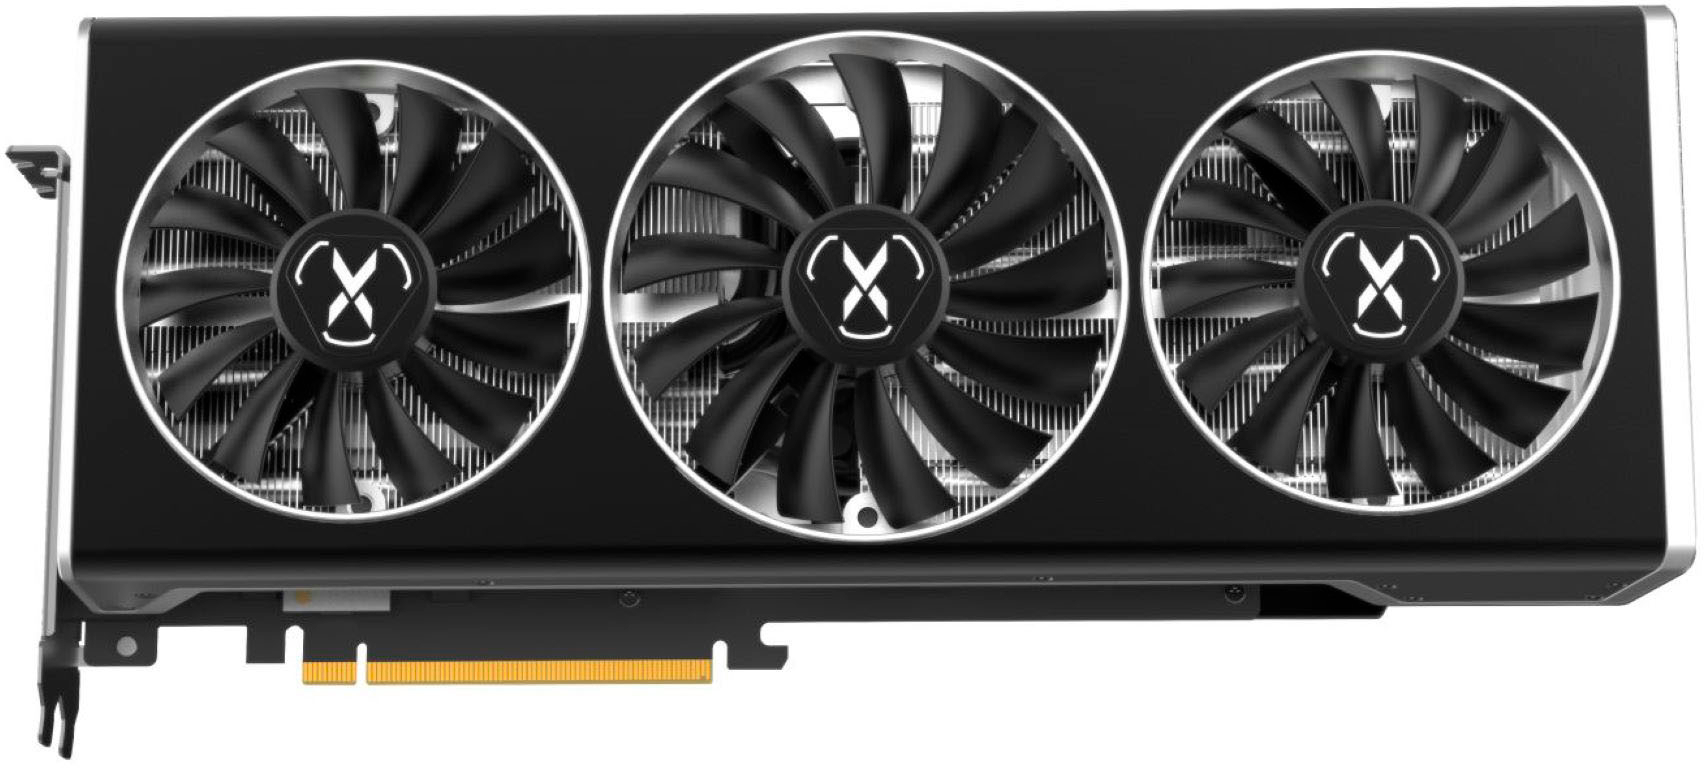 Best Buy: XFX SPEEDSTER MERC319 AMD Radeon RX 6750XT Core 12GB